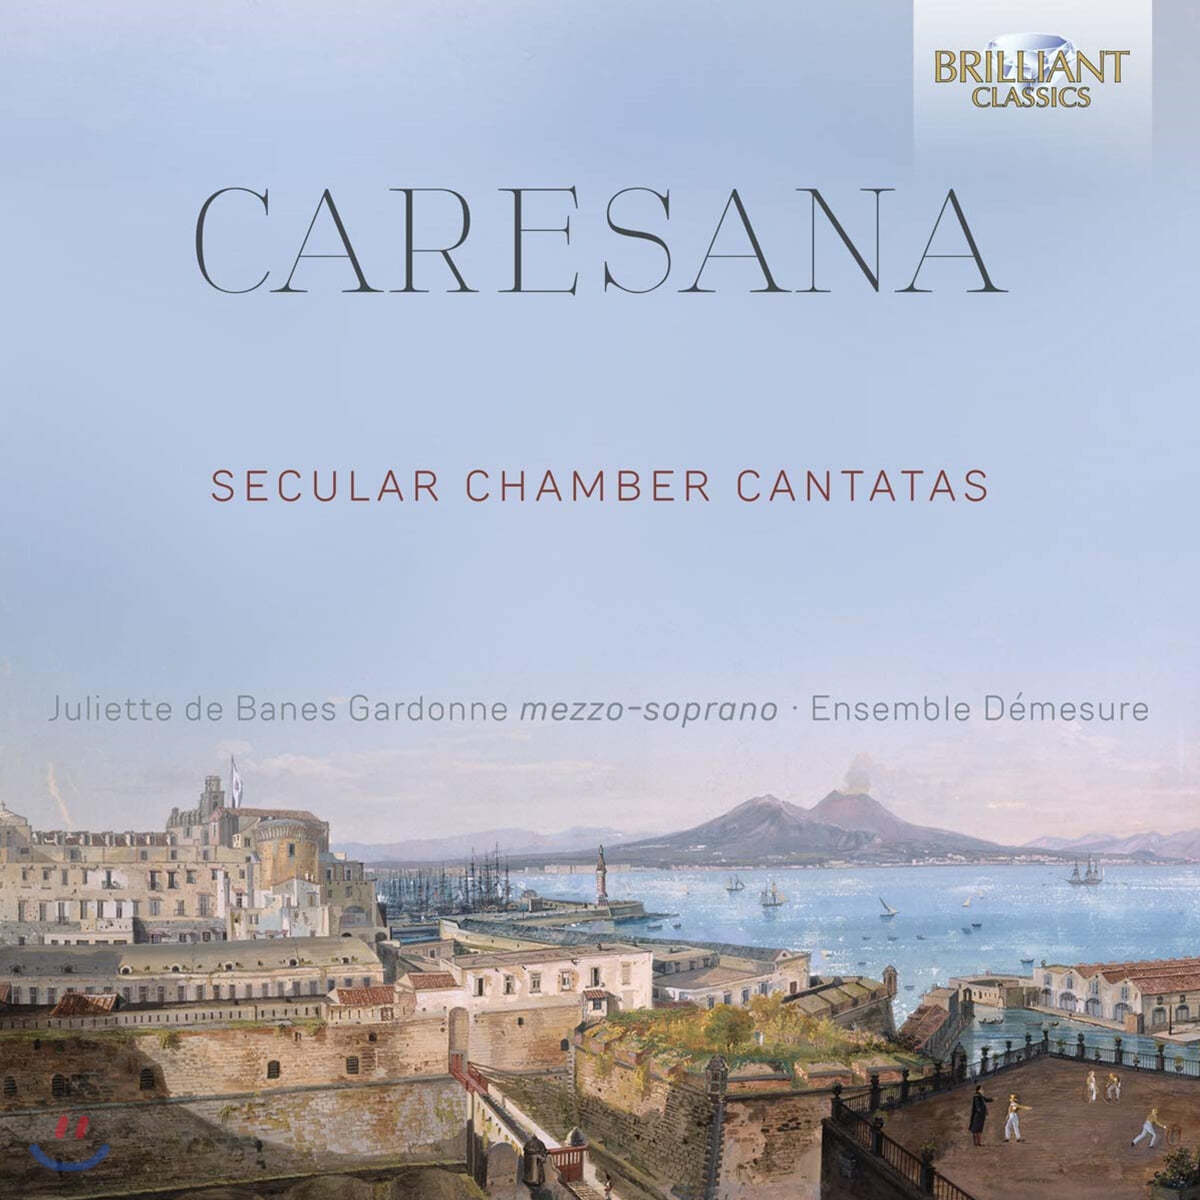 Juliette de Banes Gardonne 크리스토파로 카레사나: 세속 칸타타곡집 (Cristoforo Caresana: Chamber Cantatas)